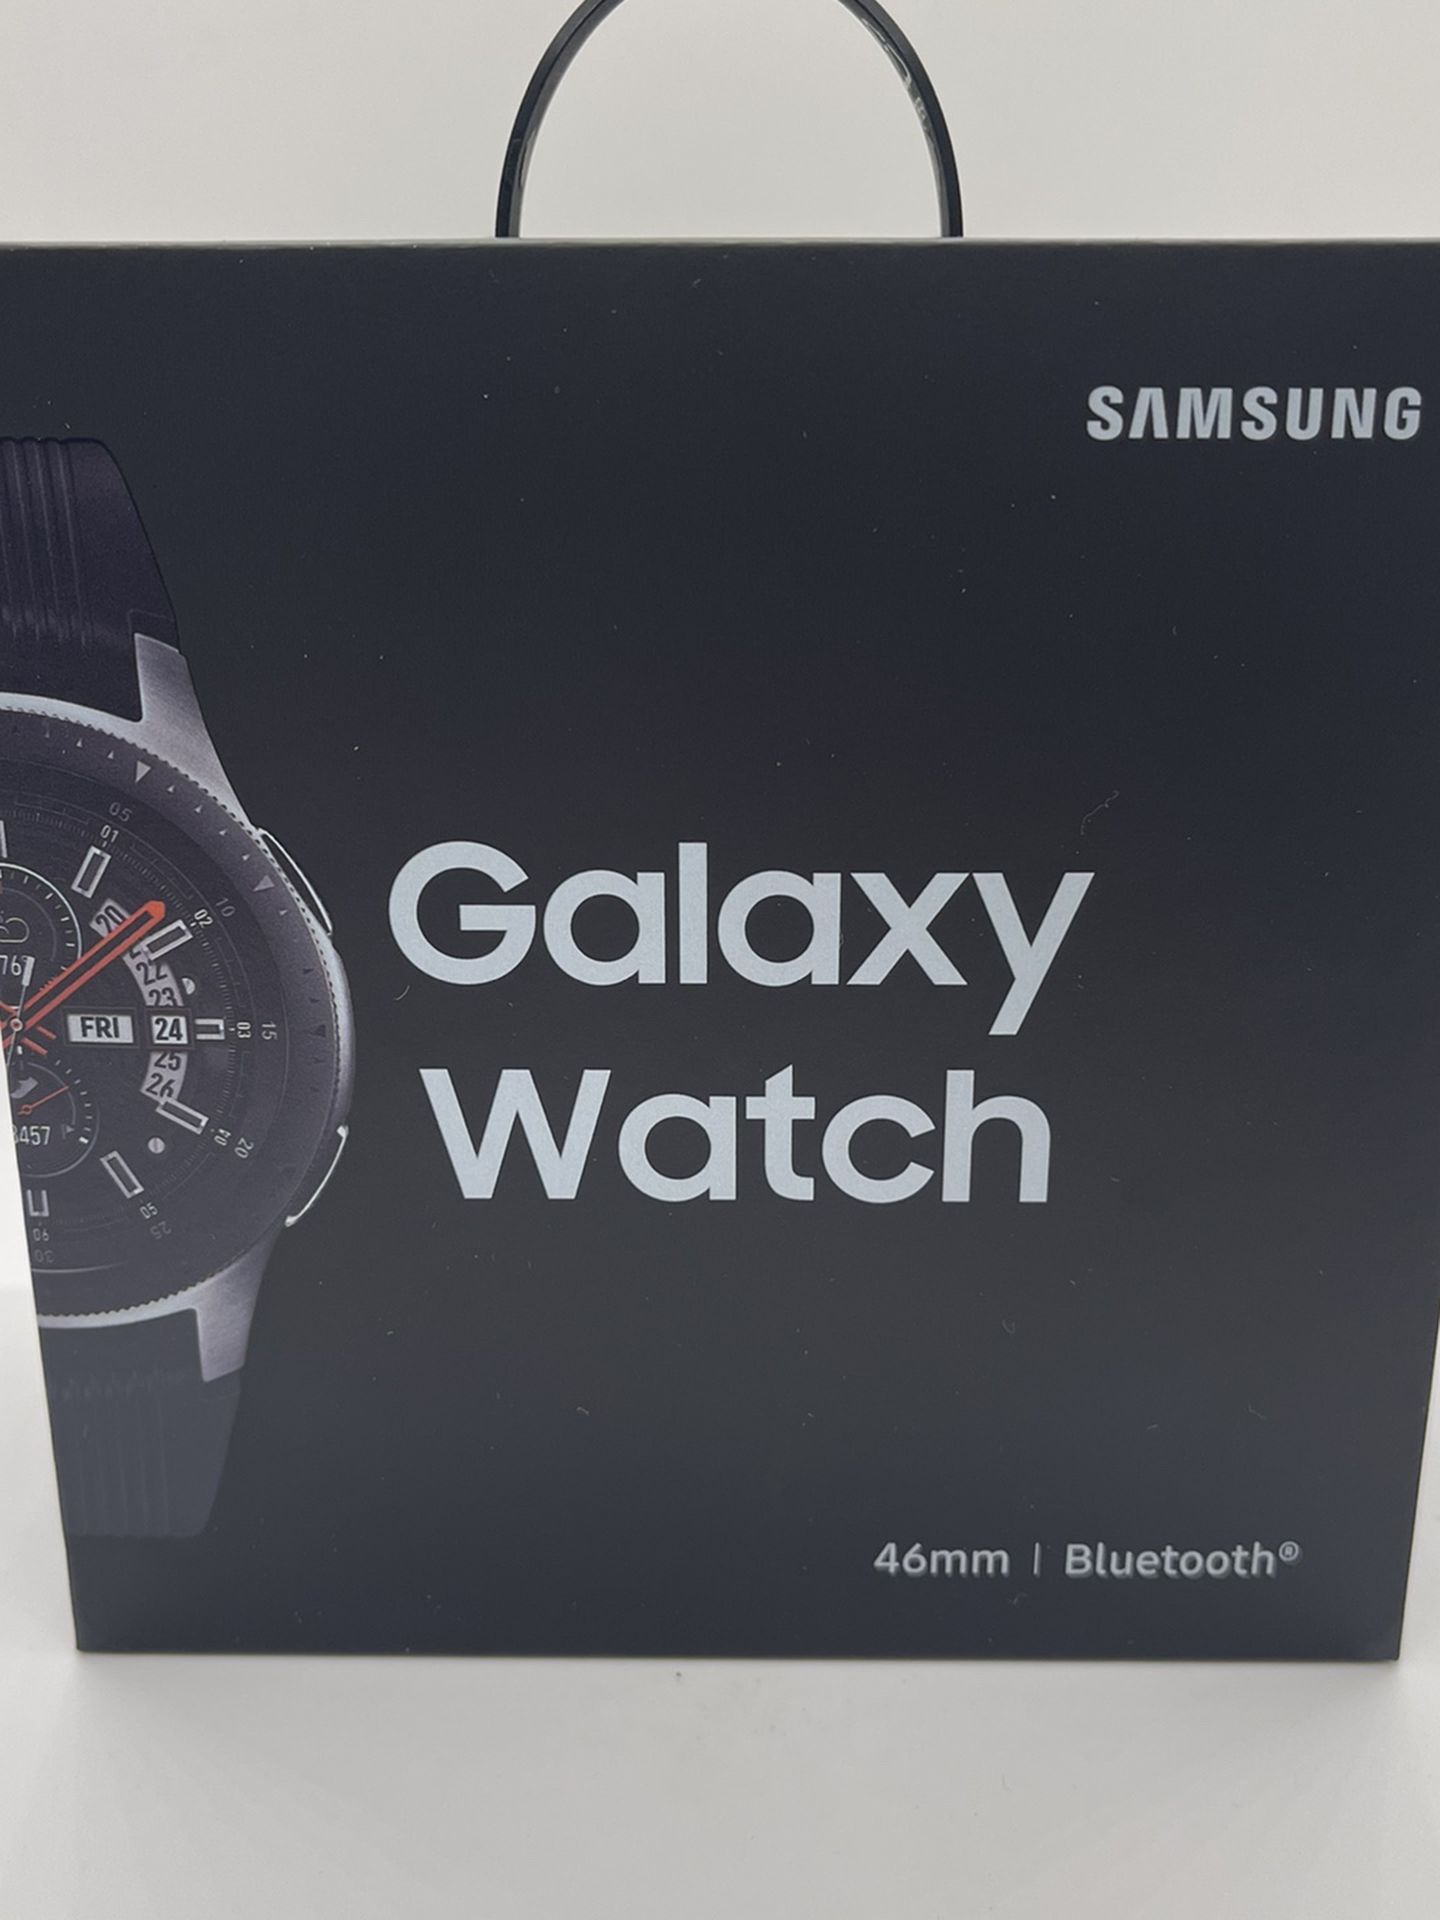 Samsung Galaxy Watch 46mm Smartwatch Silver Bluetooth - Brand New